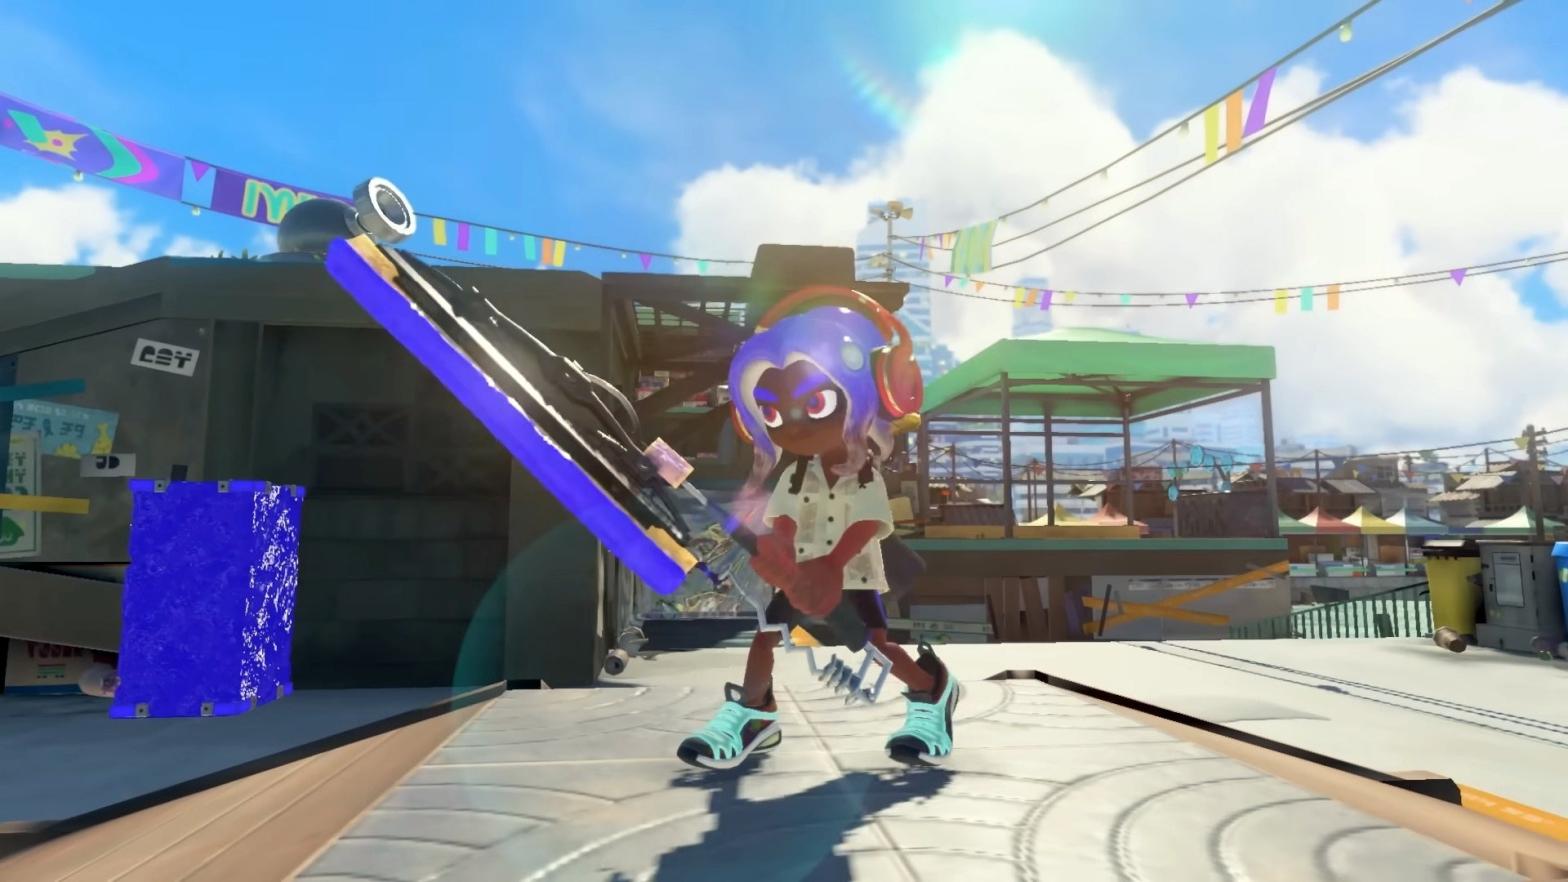 Strike a pose before painting foes. (Image: Nintendo)